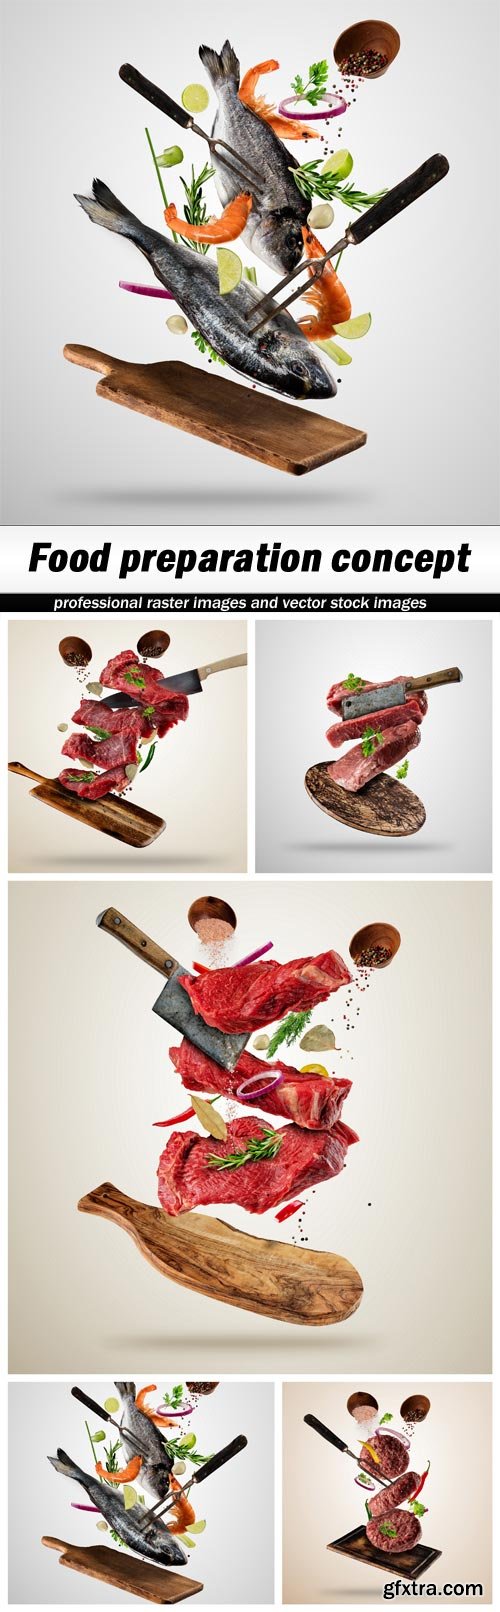 Food preparation concept - 5 UHQ JPEG